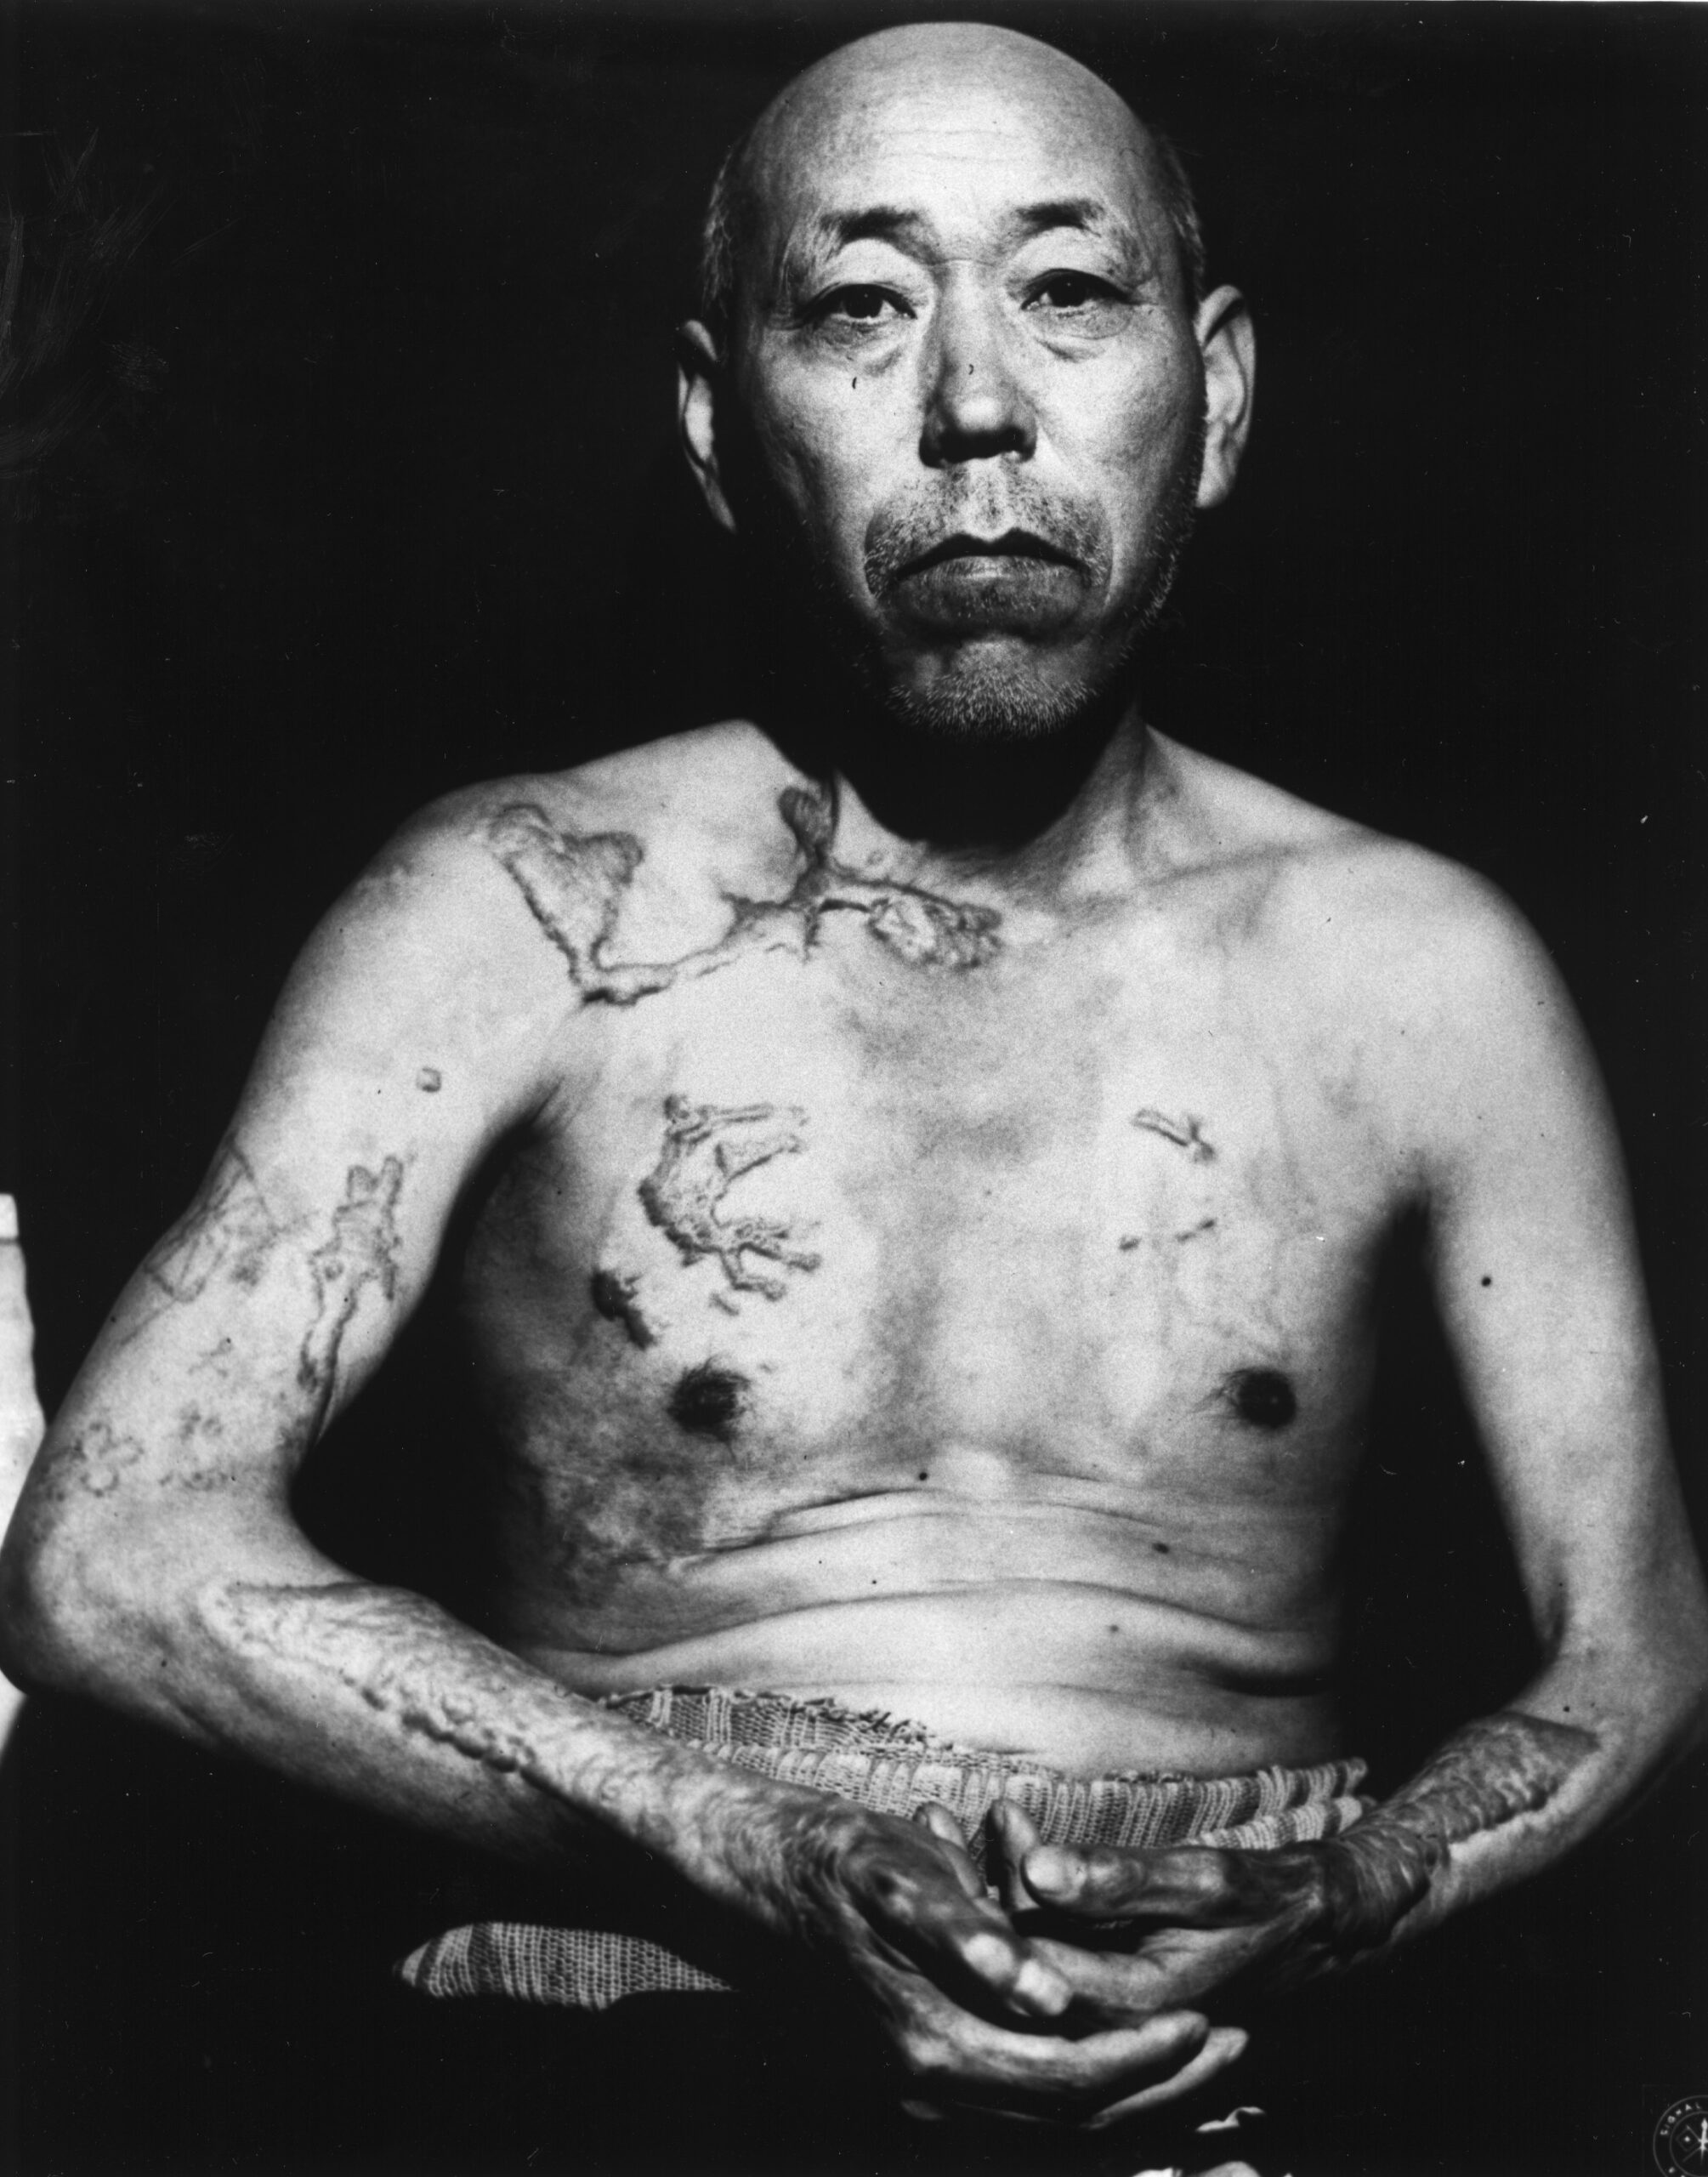 Hiroshima survivor